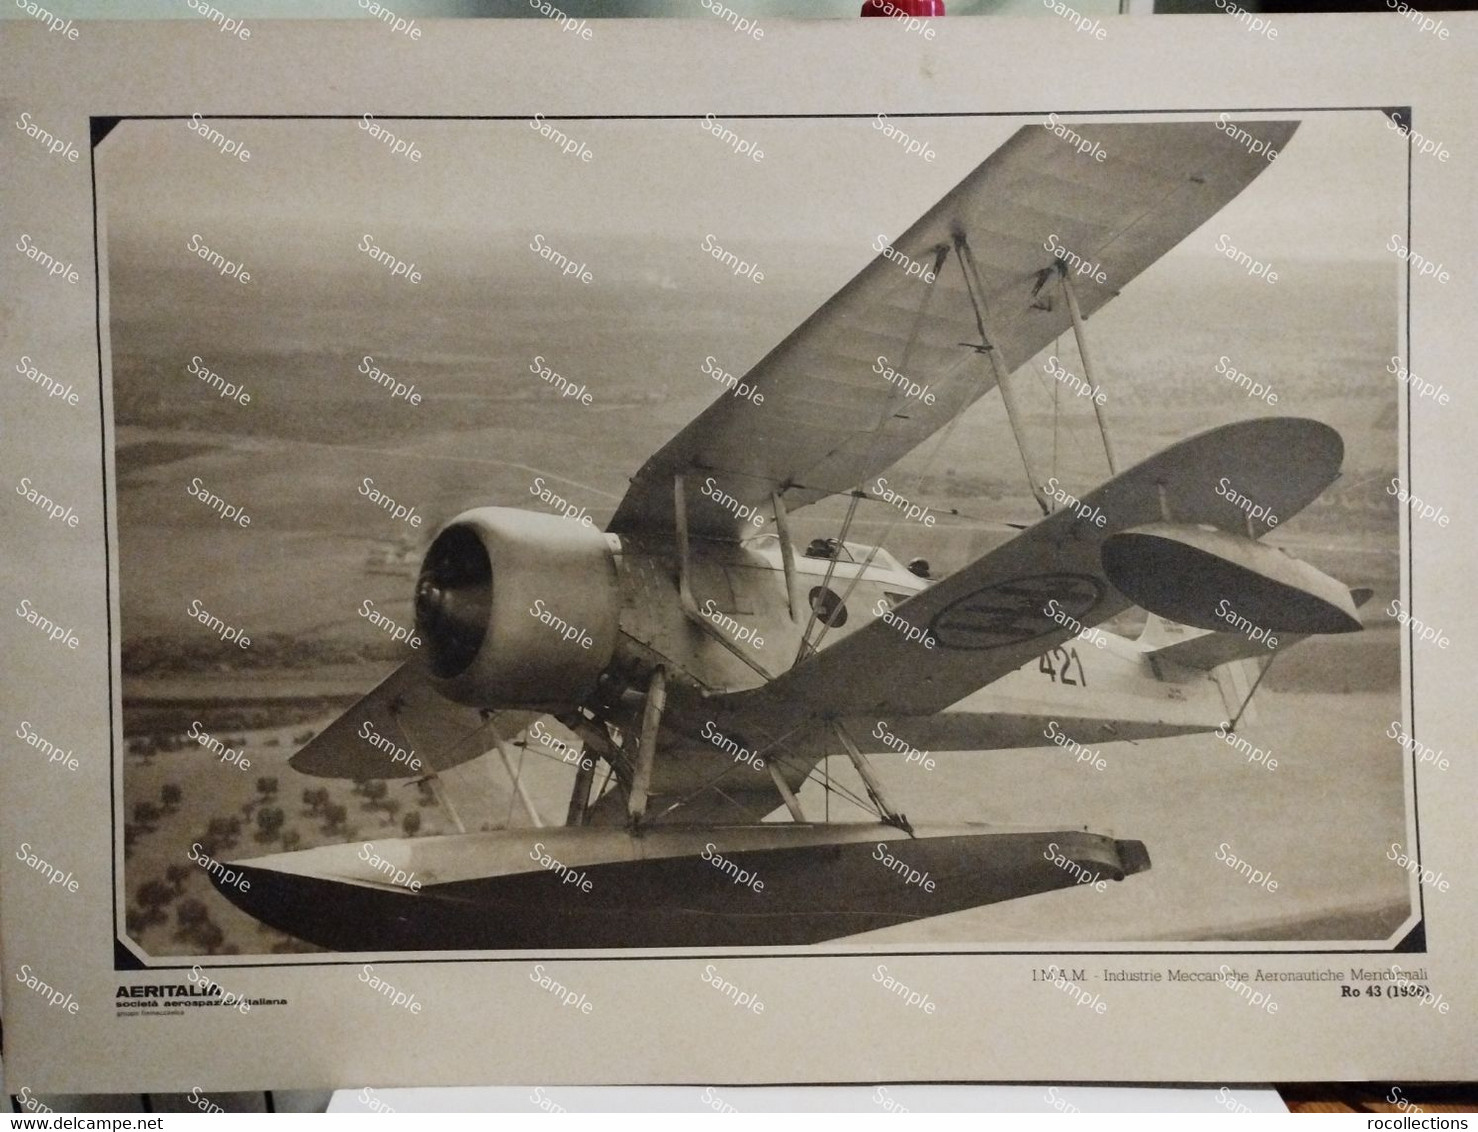 Foto Riproduzione Aviazione AERITALIANIndustrie Meccaniche Aeronautiche Meridionali Ro 43 1936 - Aviazione